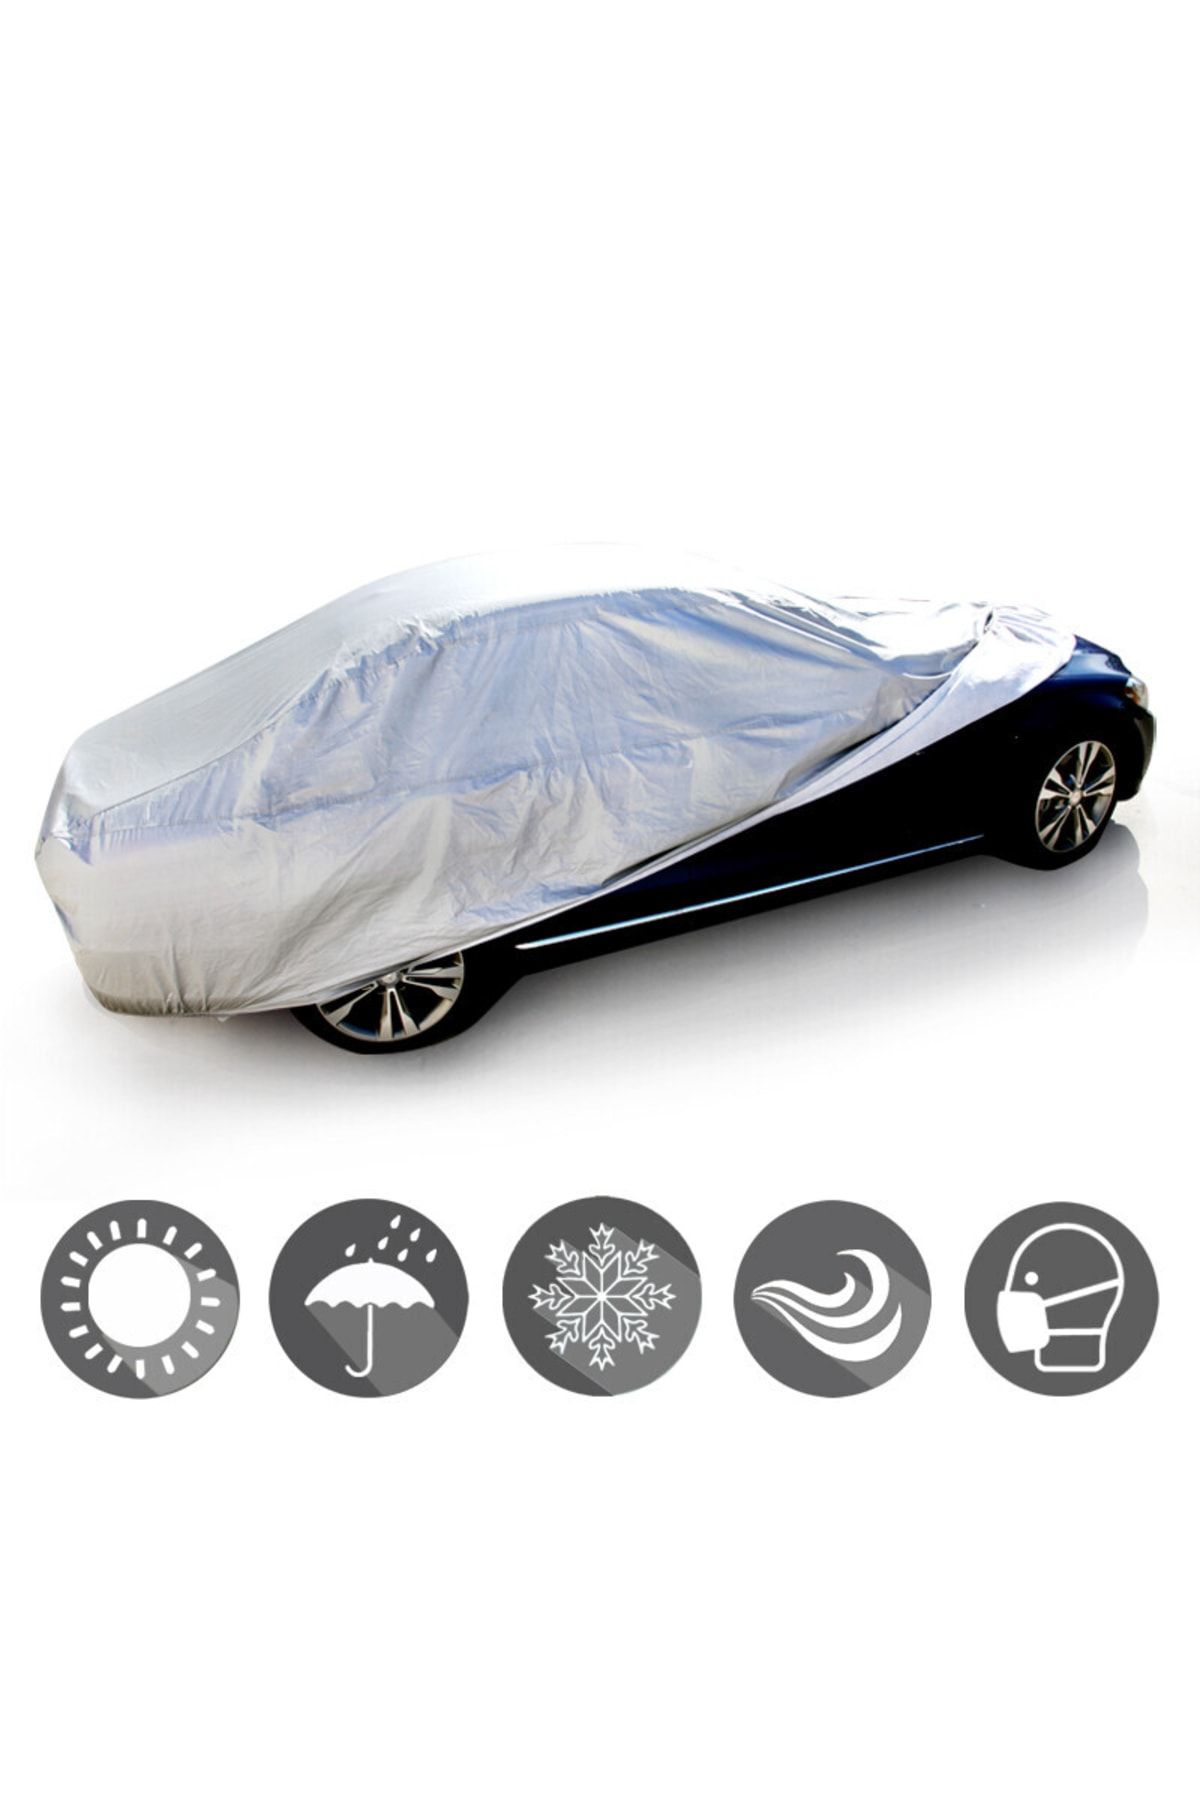 ByLizard Kia Rio Station Wagon (SW) Compatible Car Brand - Car Cover - Cover  - Trendyol